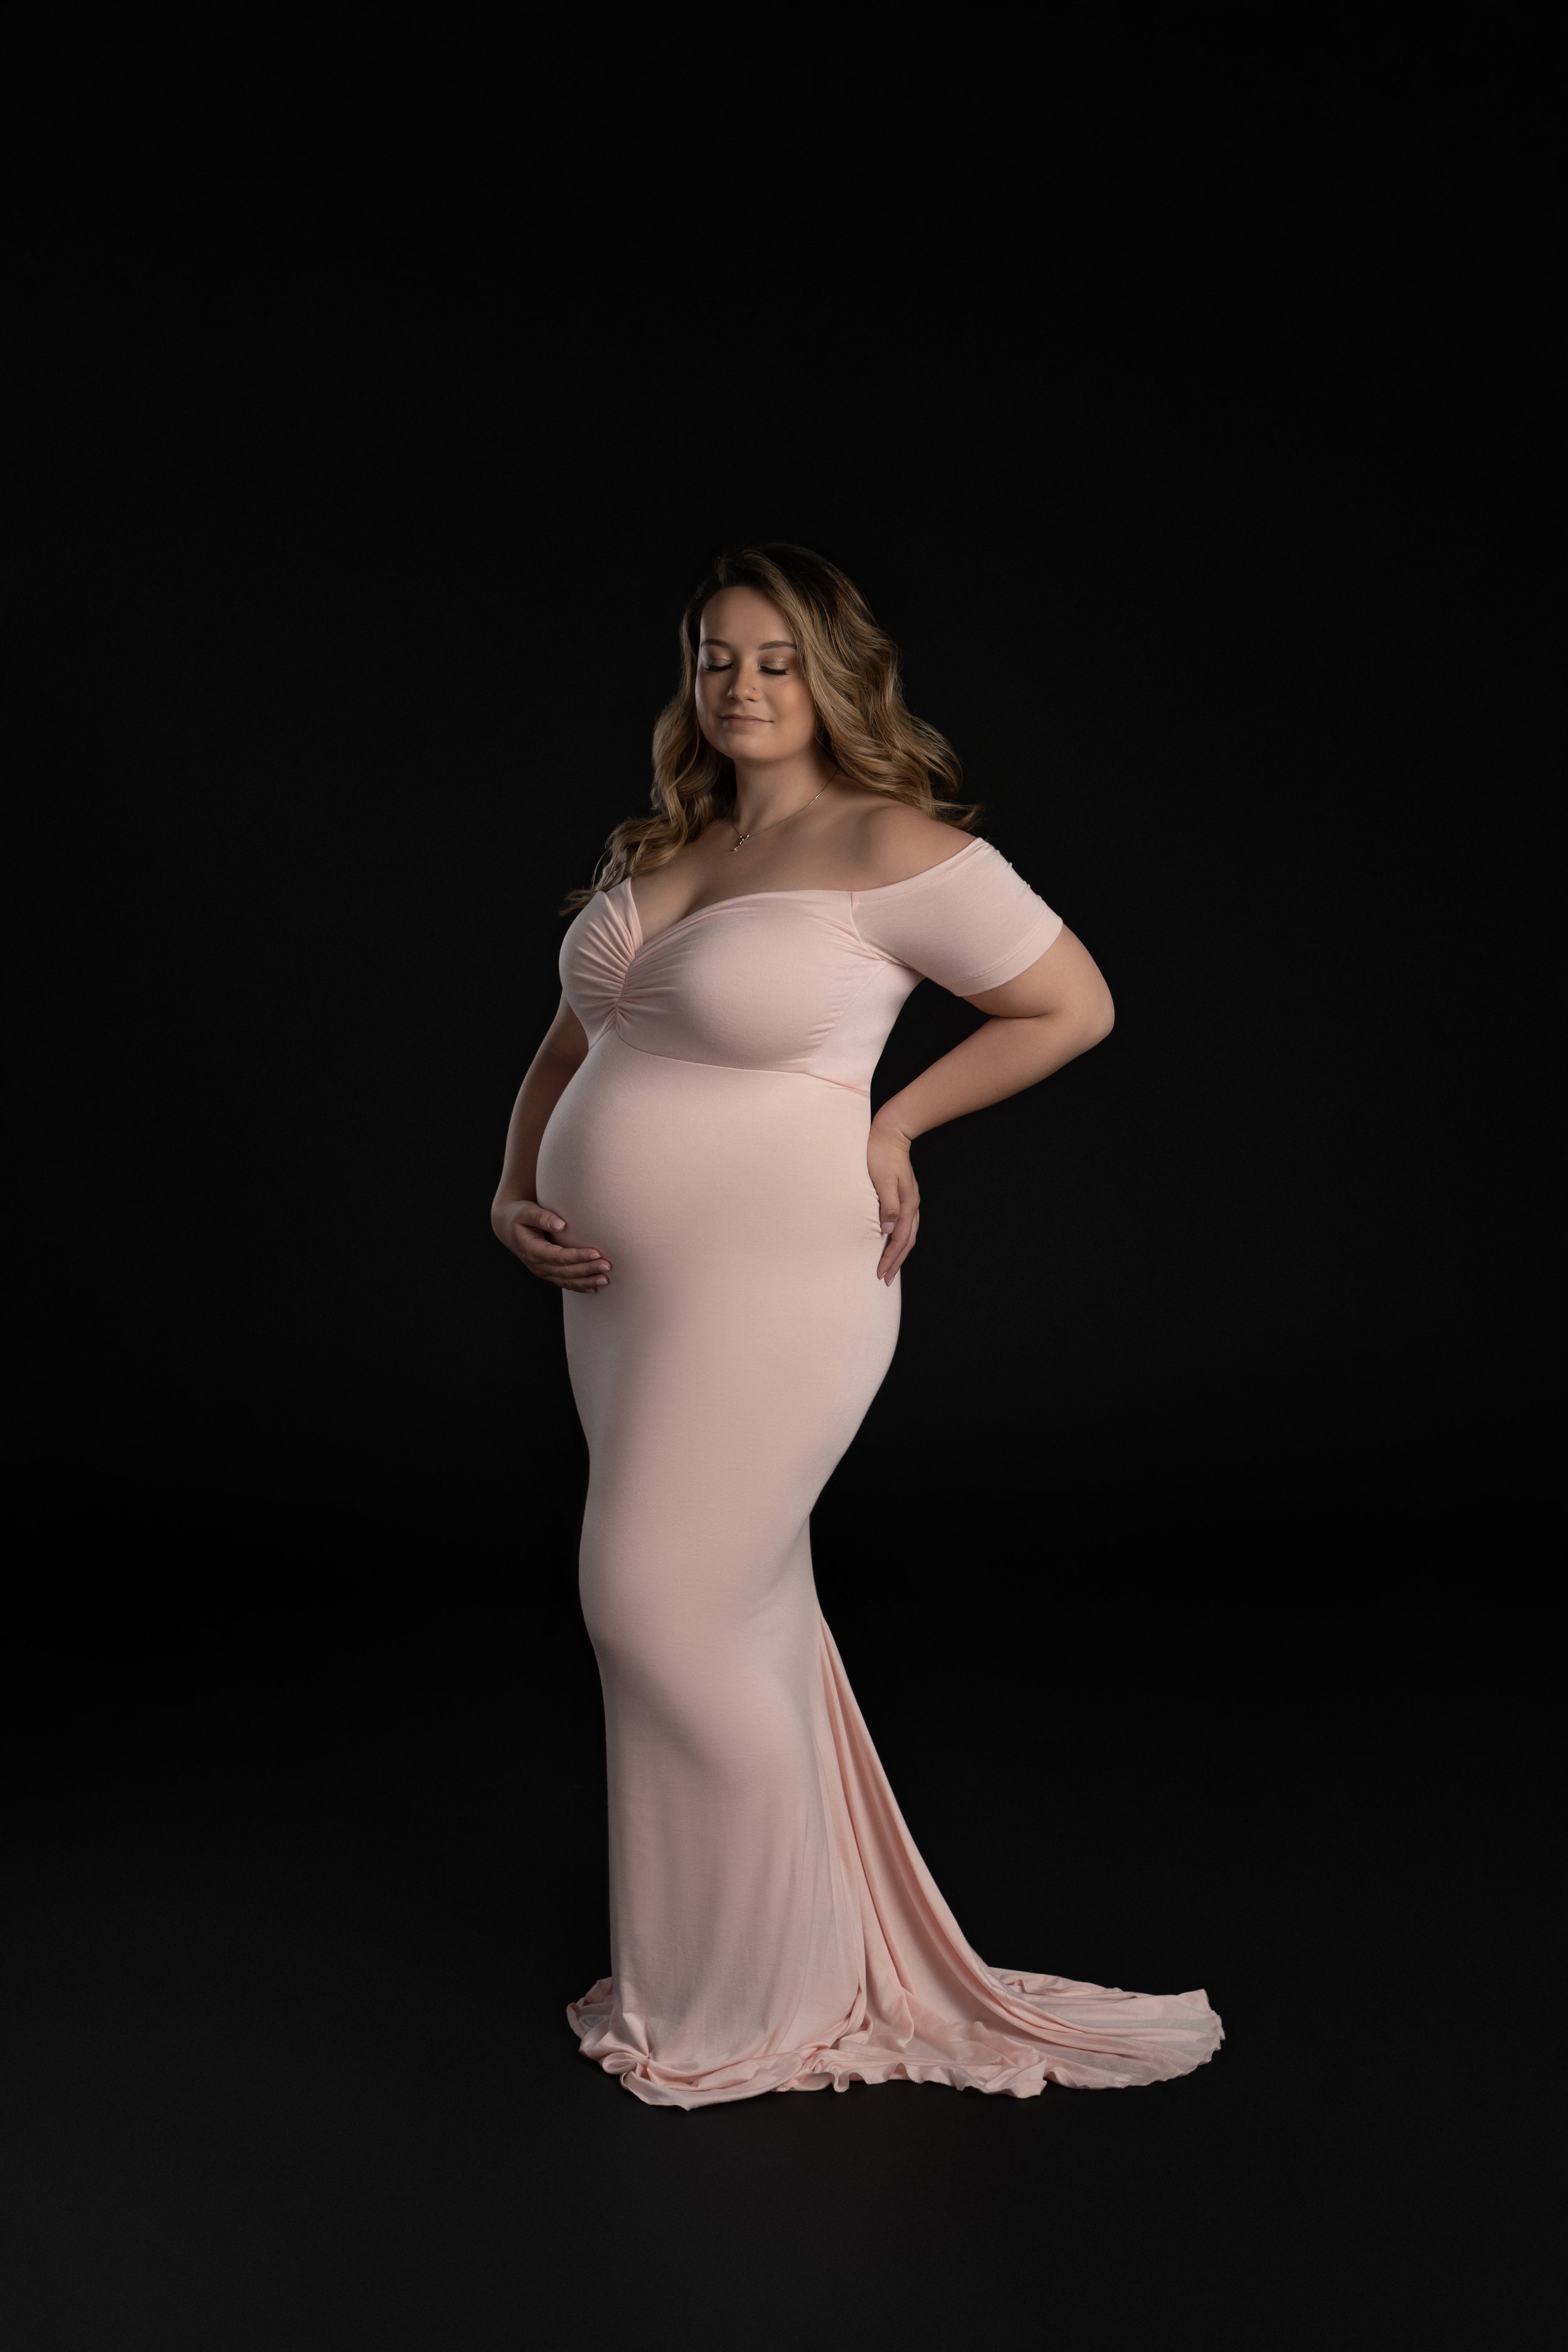 Boca-raton-maternity-photographer-mom-on-black-background